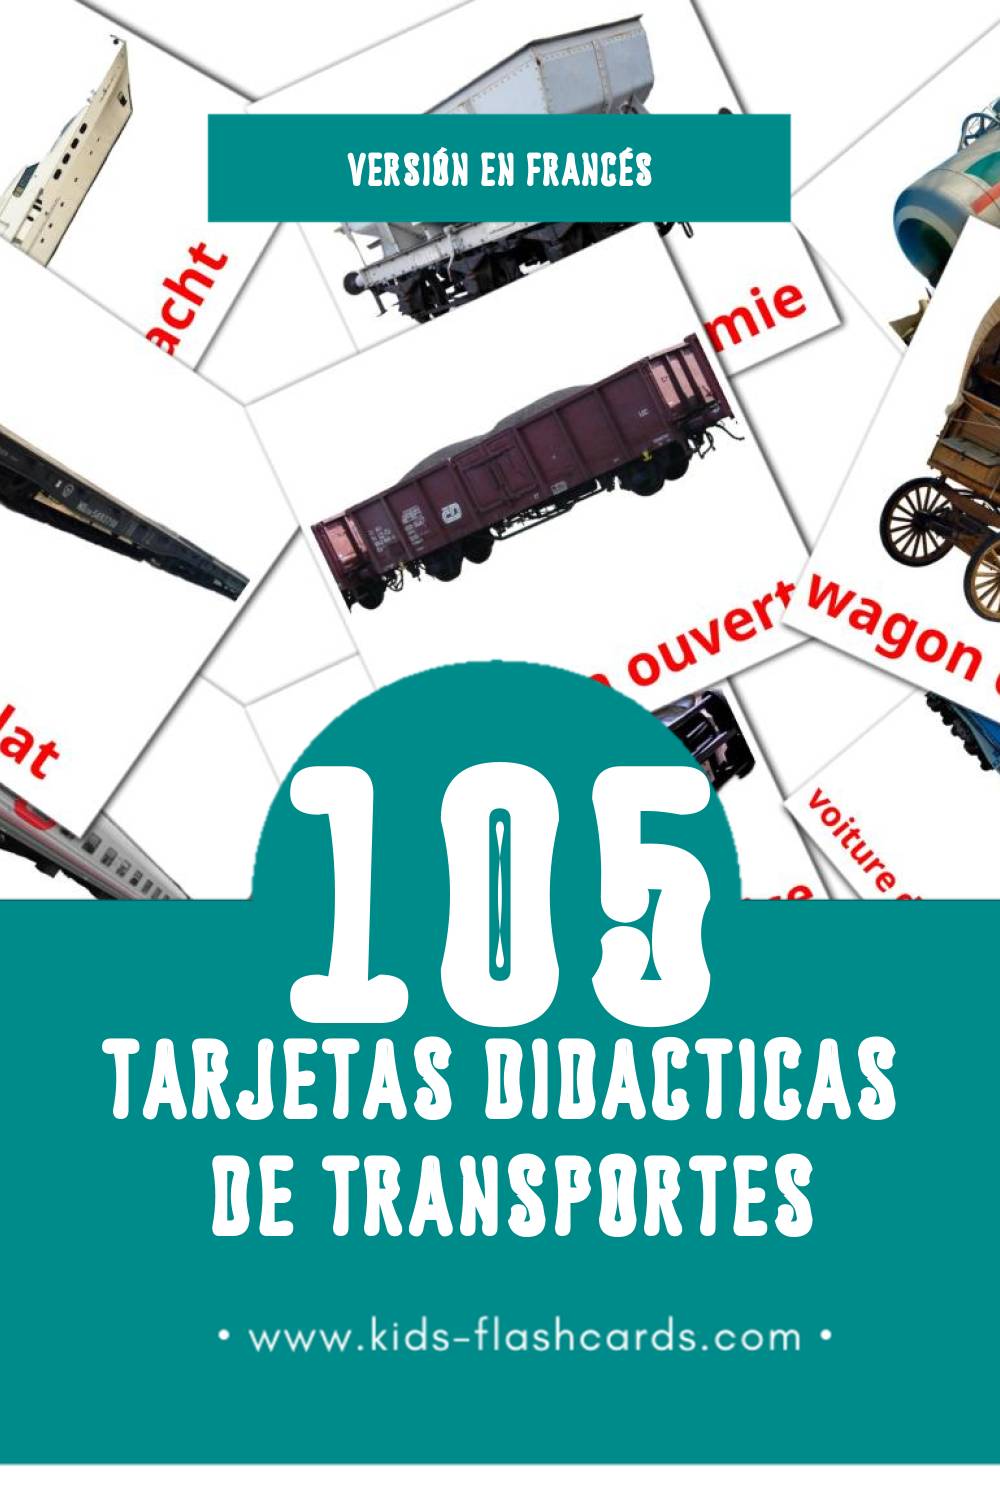 Tarjetas visuales de Les Transports para niños pequeños (108 tarjetas en Francés)